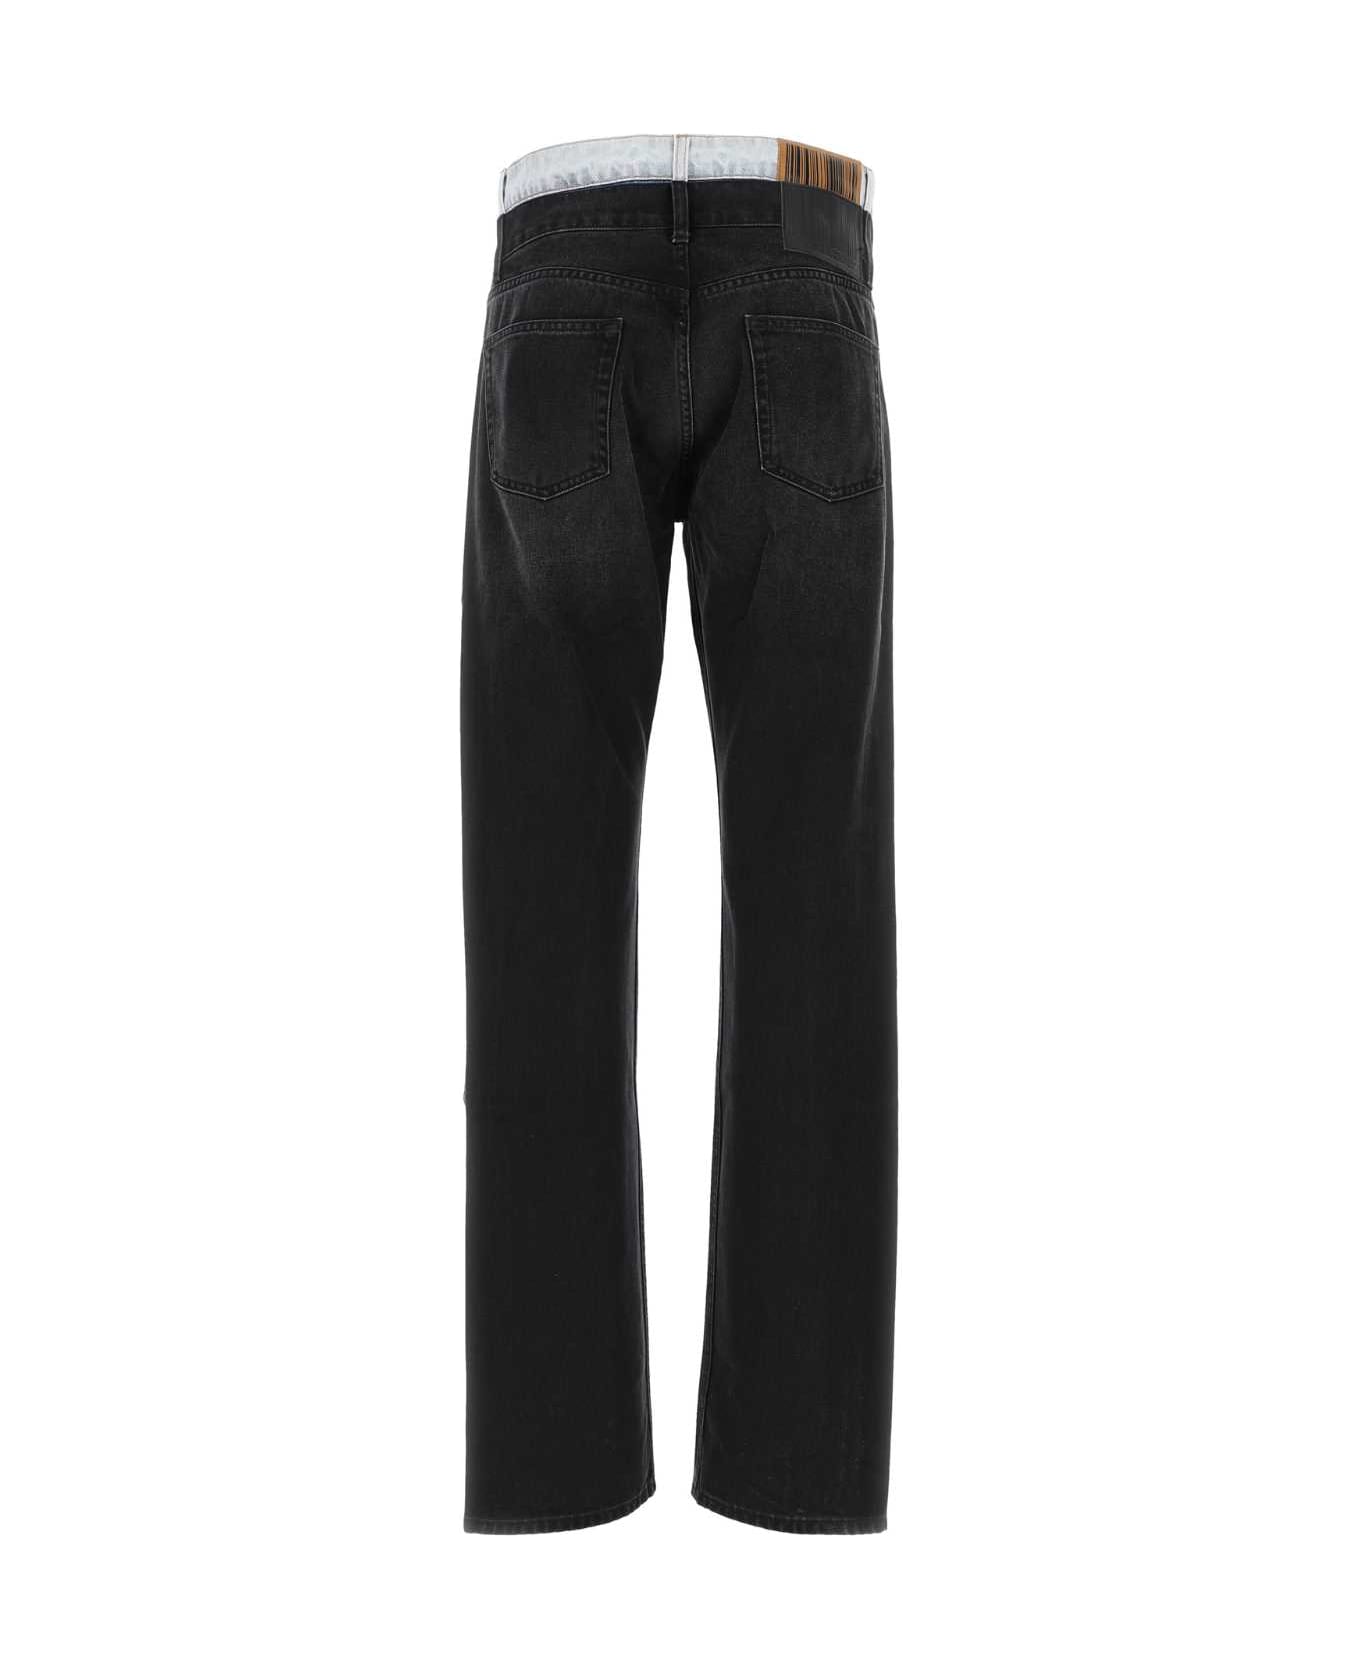 VTMNTS Black Denim Jeans - BLACKLIGHTBLUE デニム